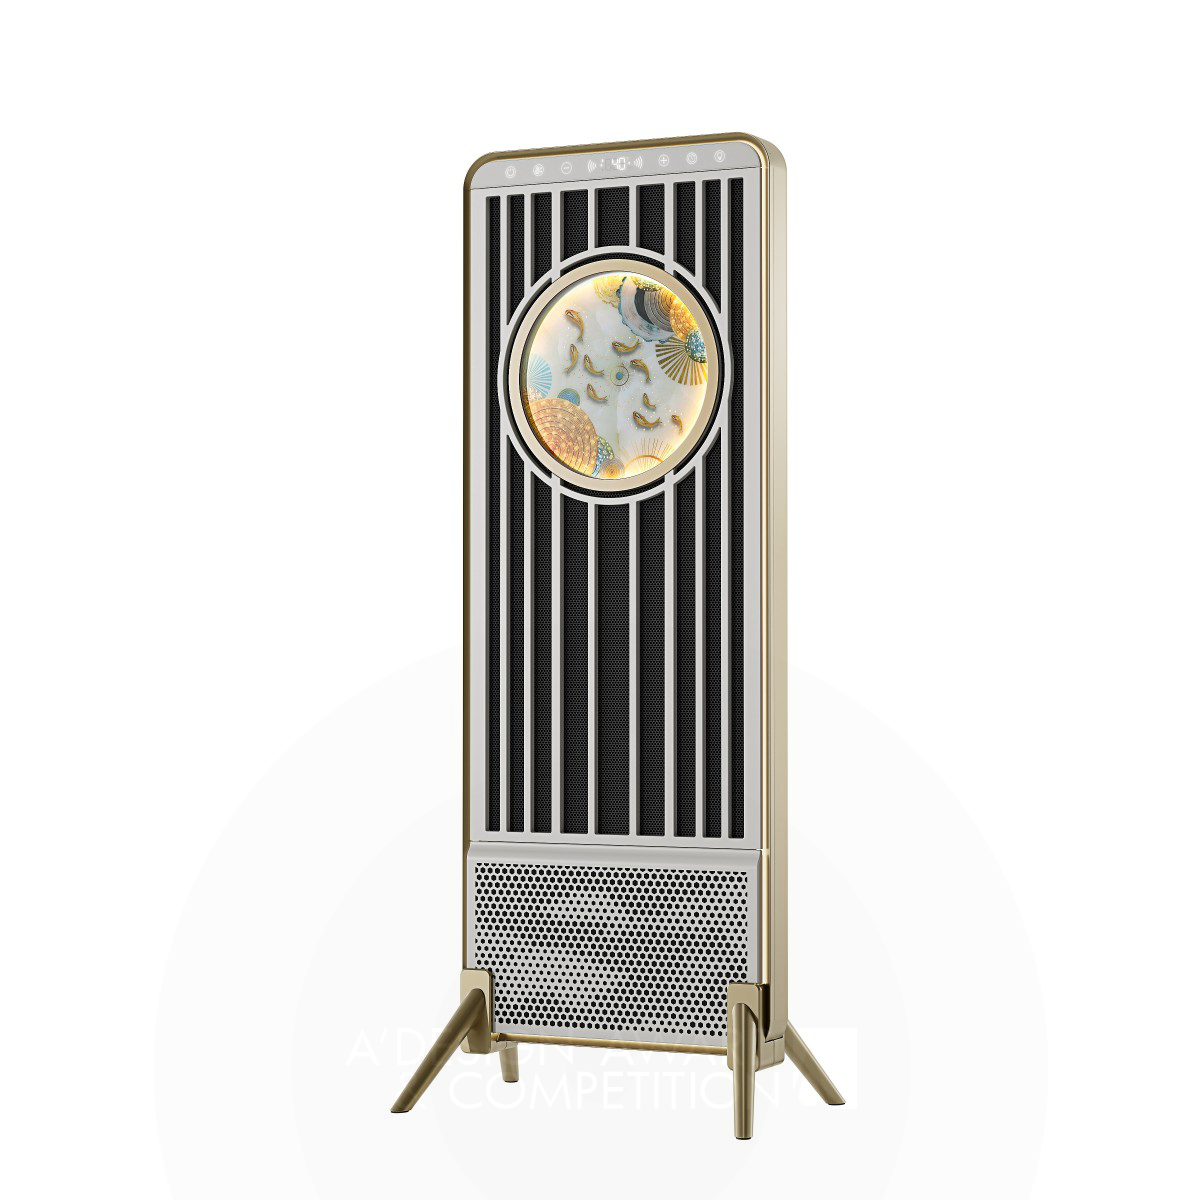 Hua Ping Electric Heater